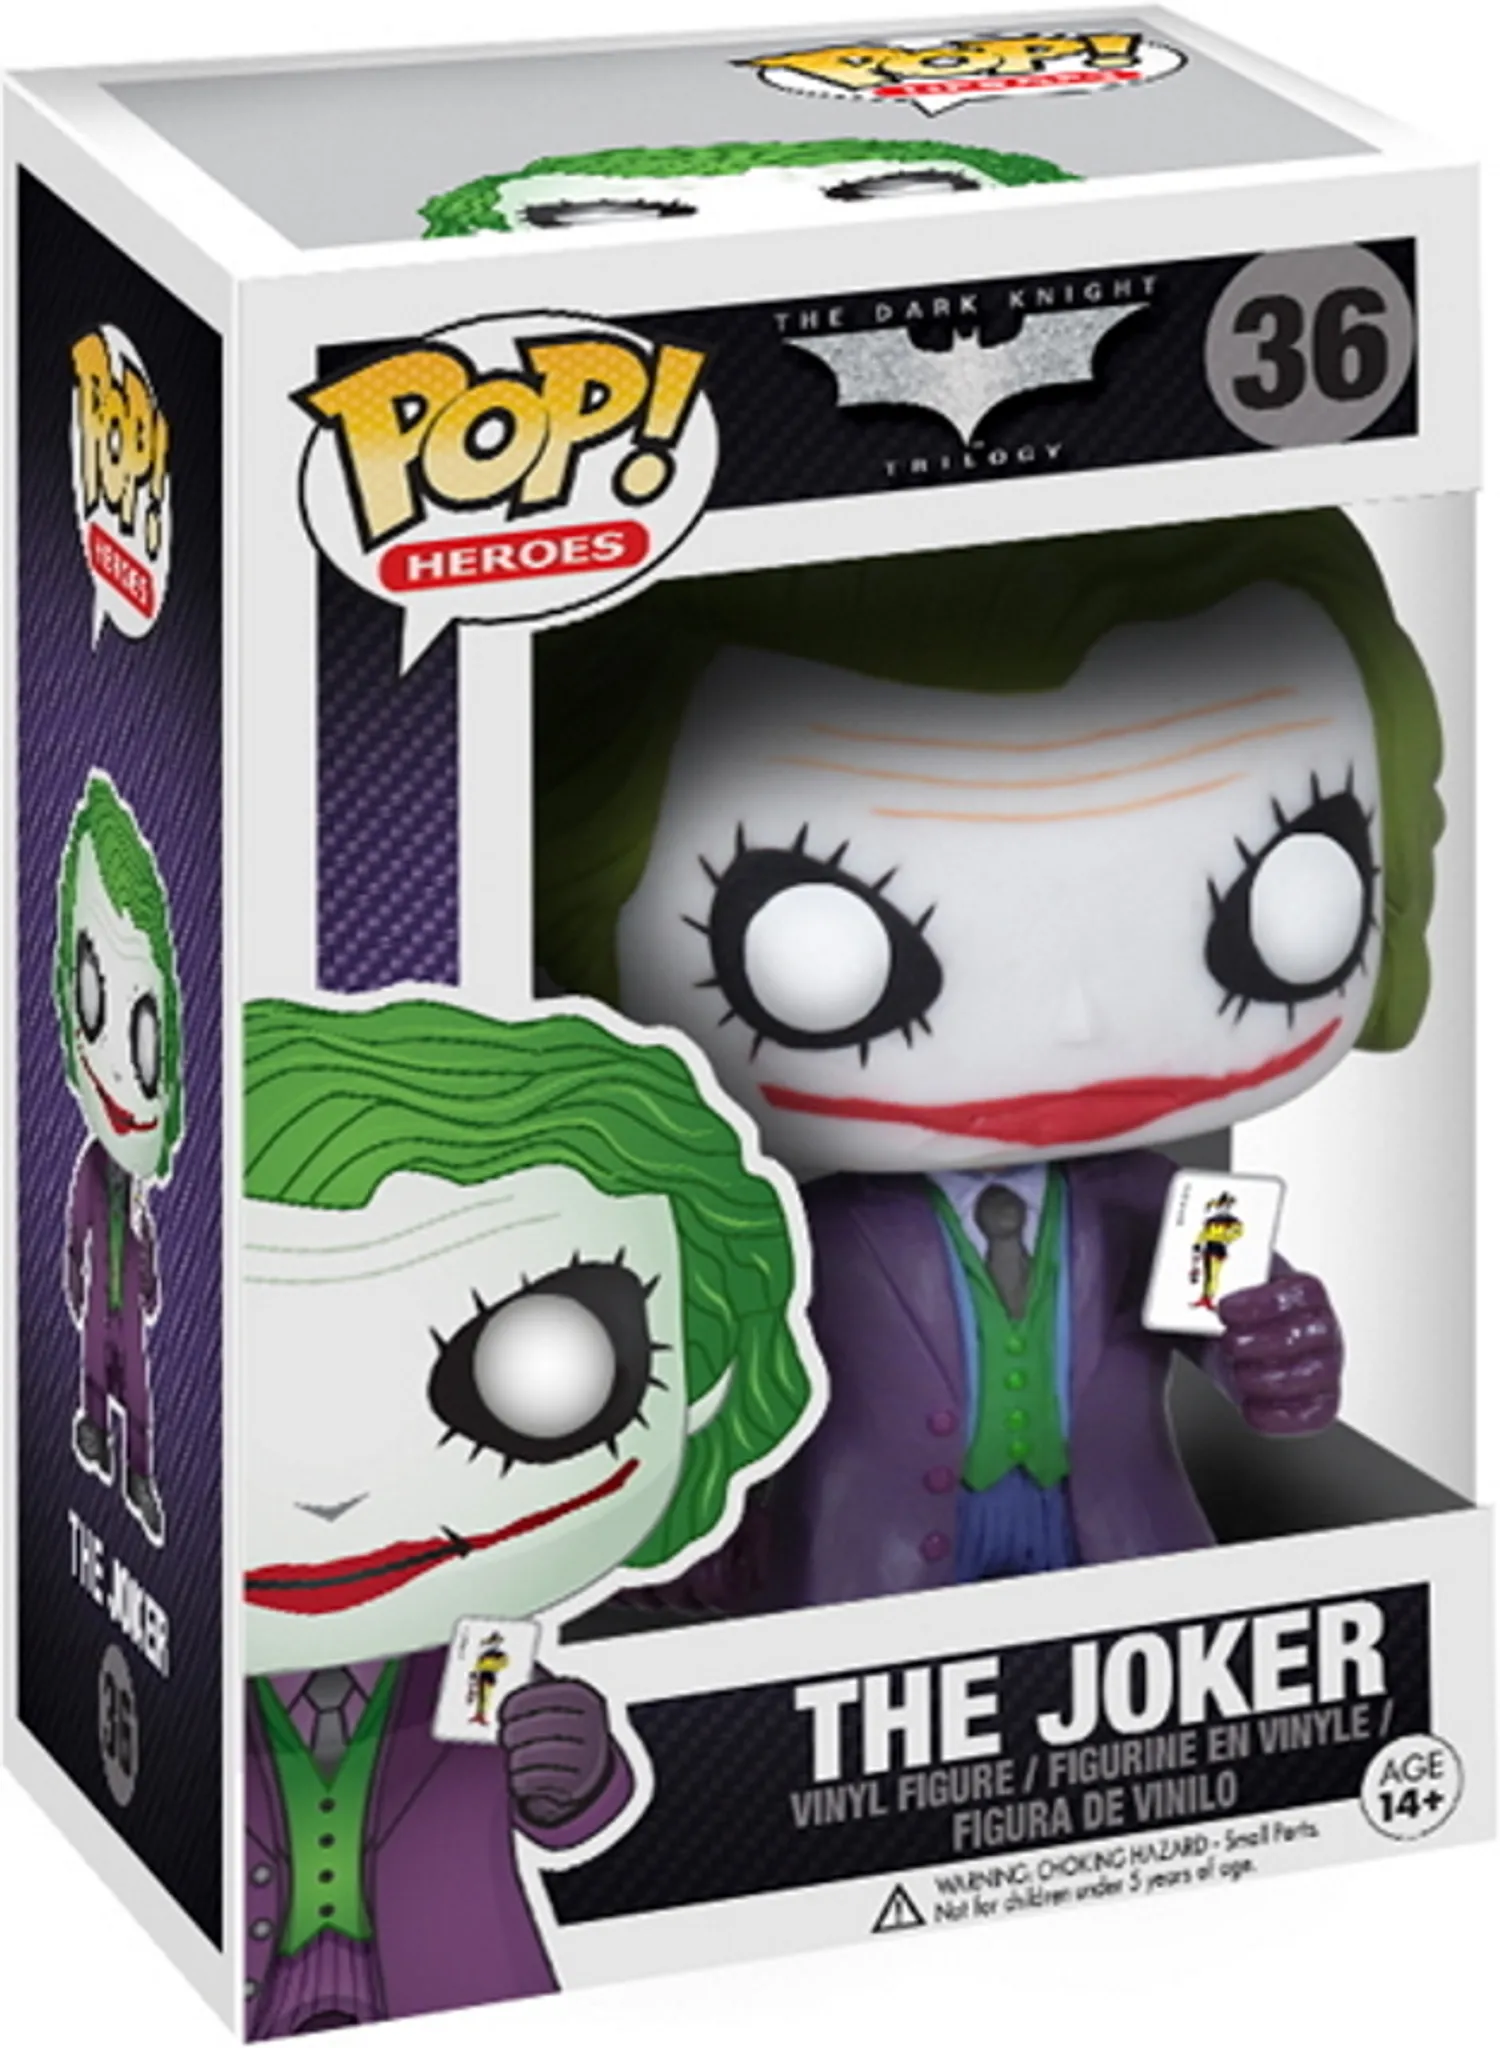 10 The Joker Dark Knight Trilogy Funko Pop #334 Heroes Batman's Nemesis  New!